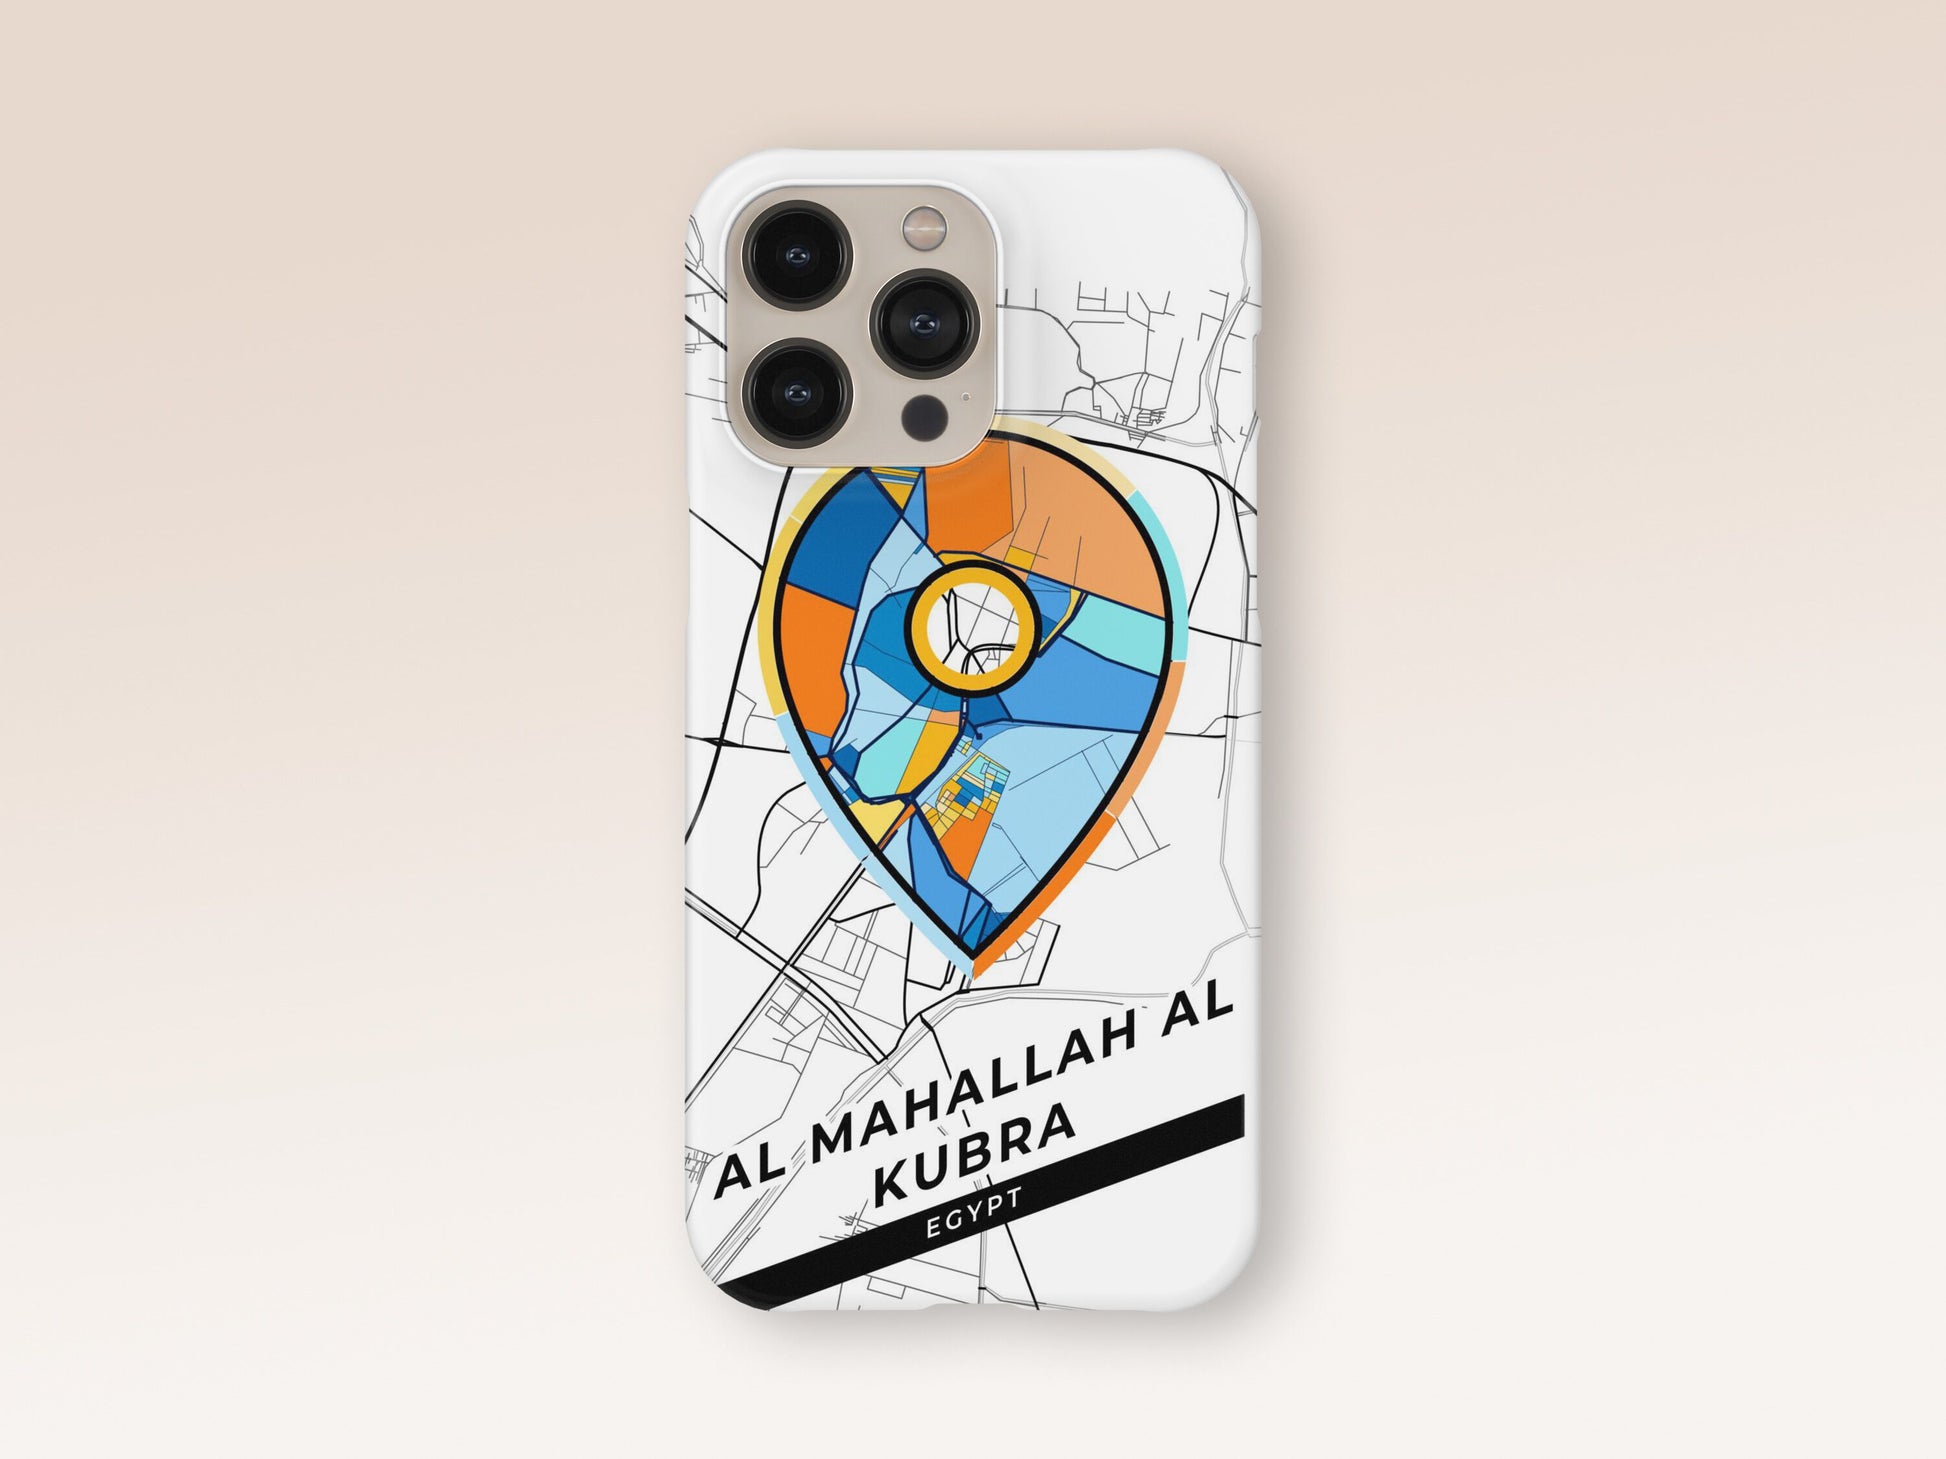 Al Mahallah Al Kubra Egypt slim phone case with colorful icon. Birthday, wedding or housewarming gift. Couple match cases. 1